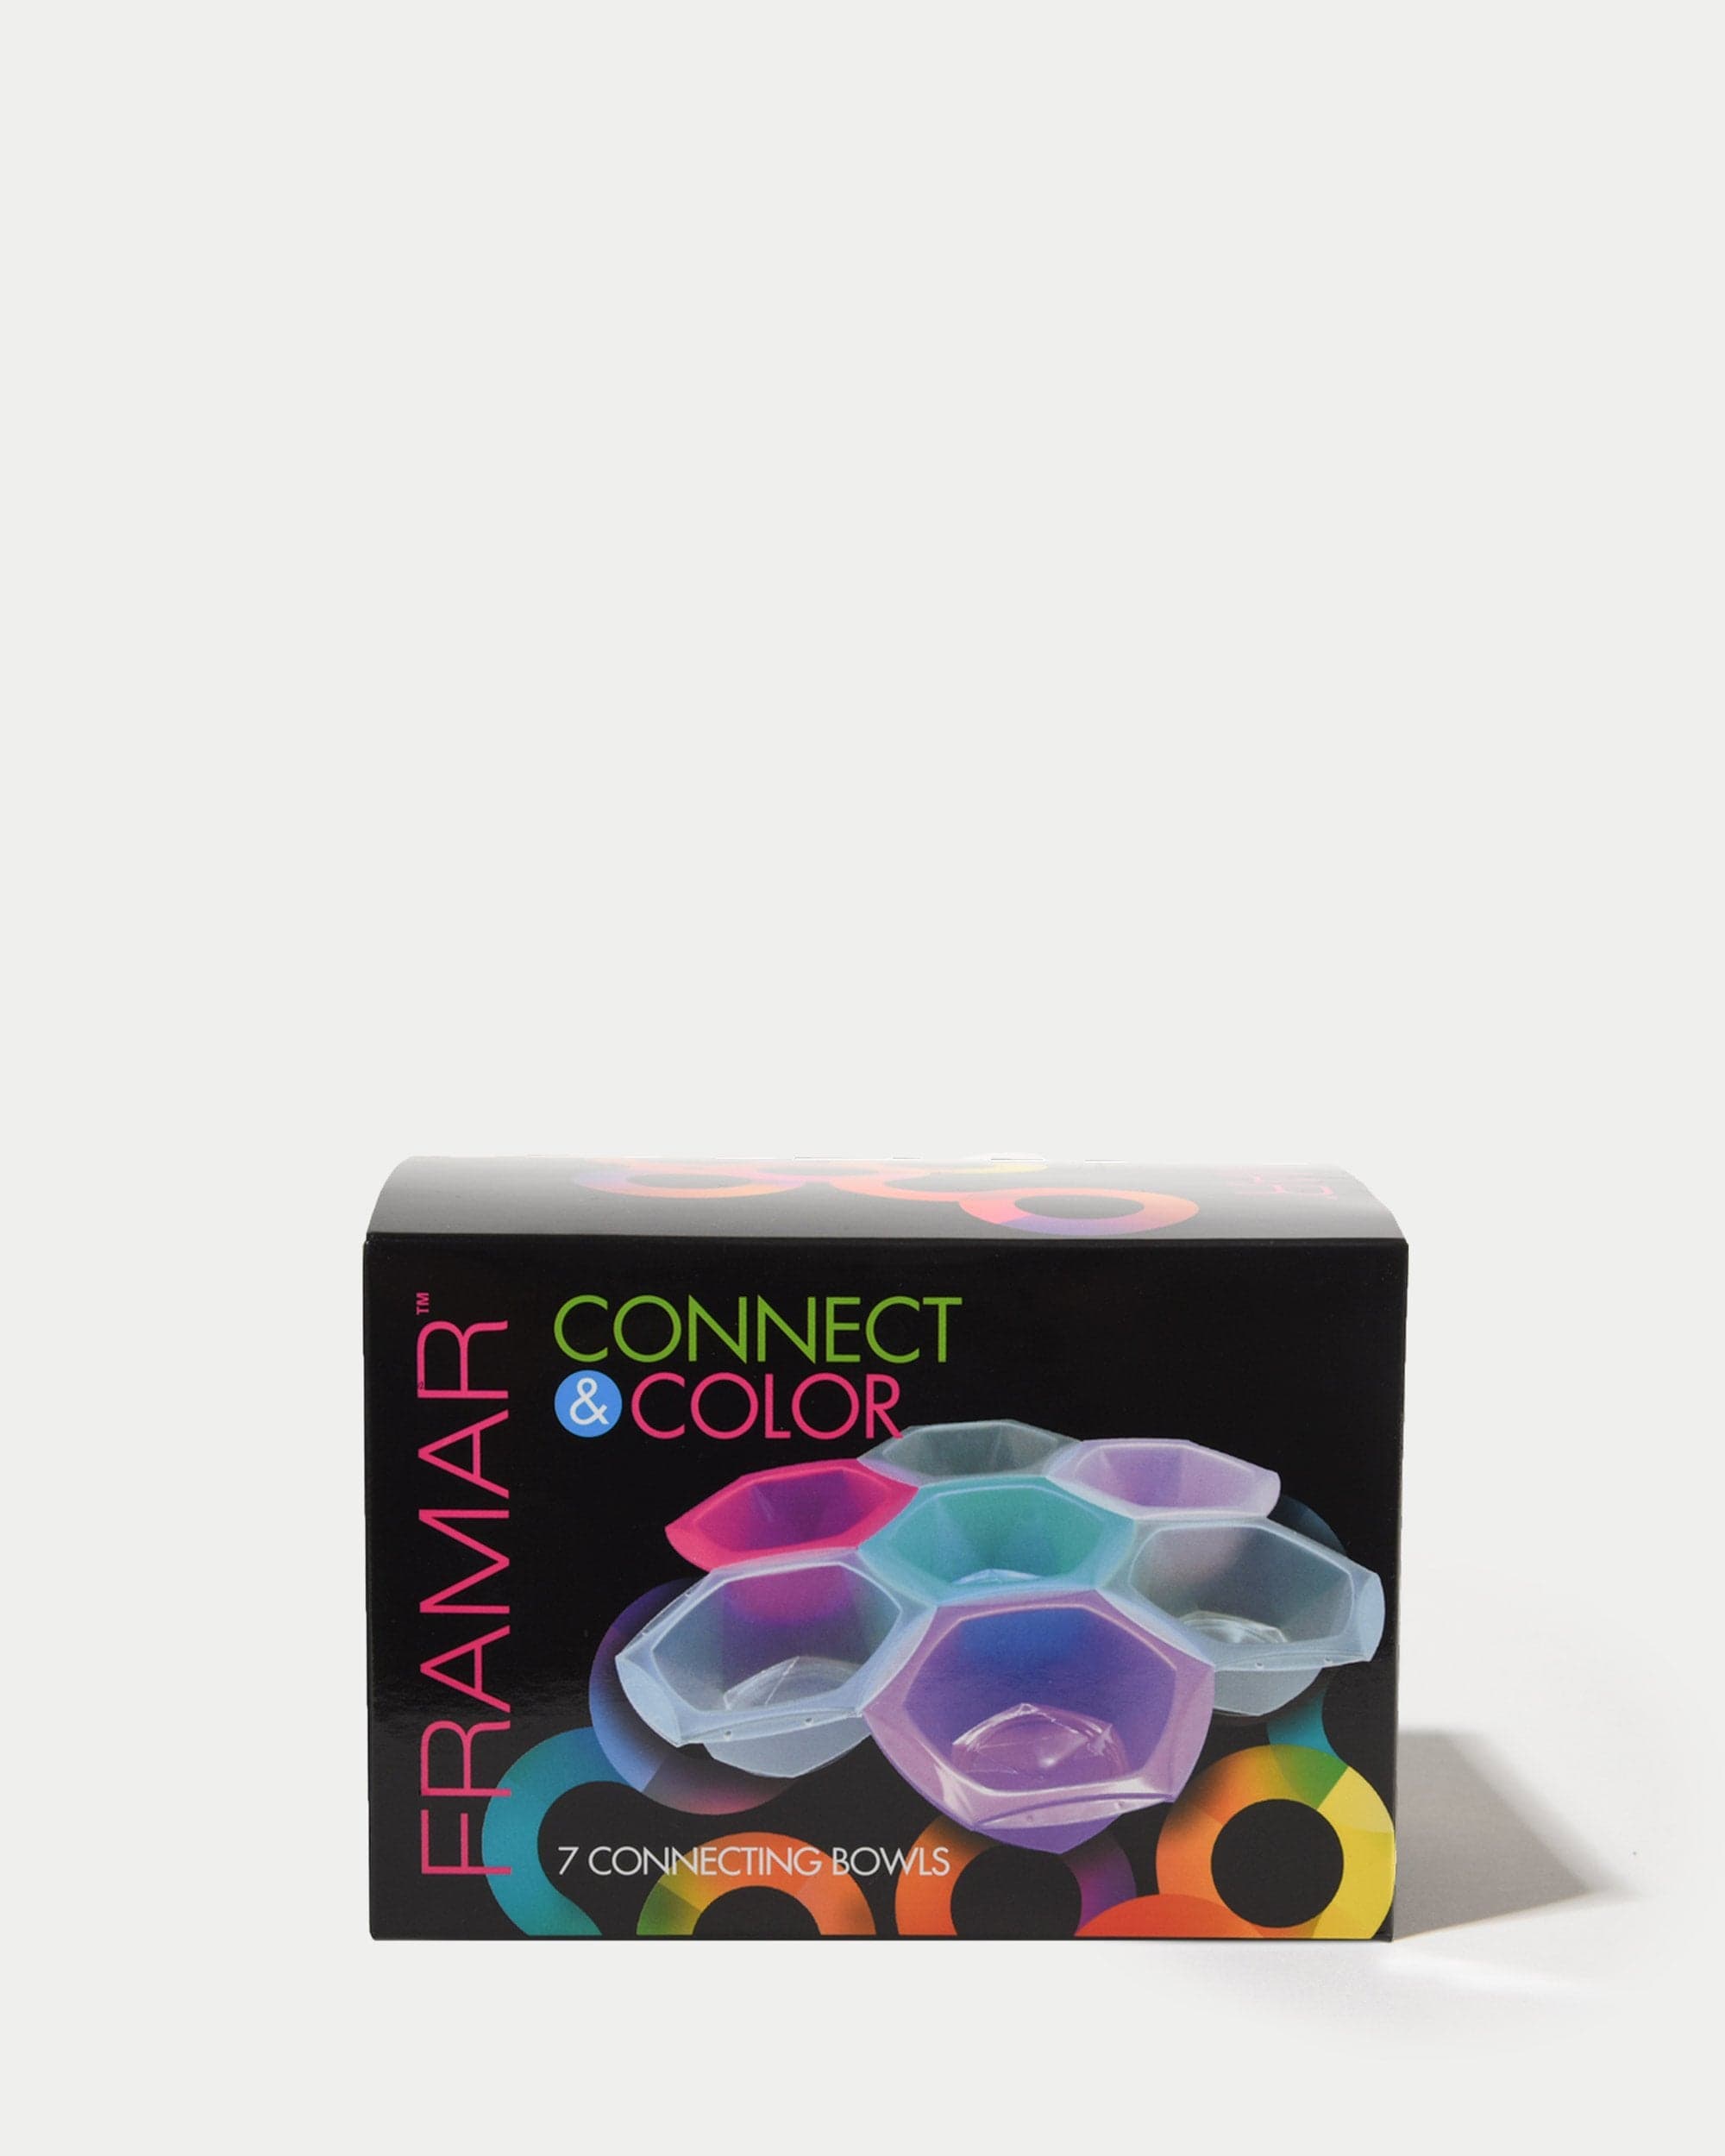 Connect & Colour Bowls Rainbow Hair - Framar - Luxe Pacifique